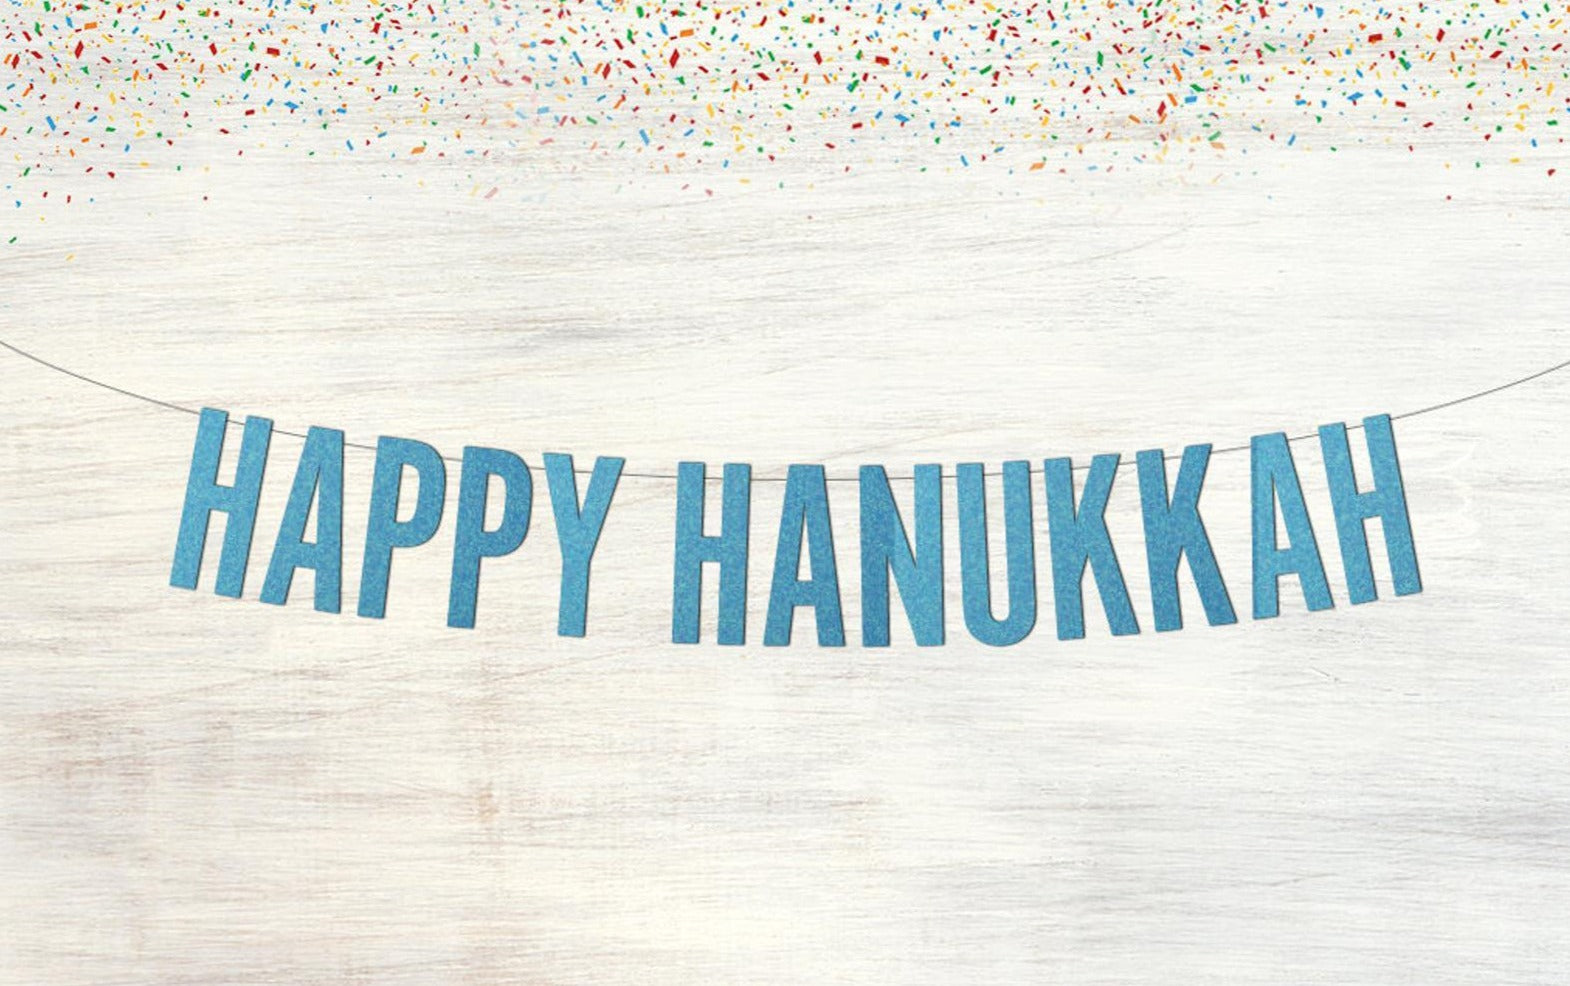 The KitCut Decorations Happy Hanukkah Blue Glitter Banner - Block or Script Letters